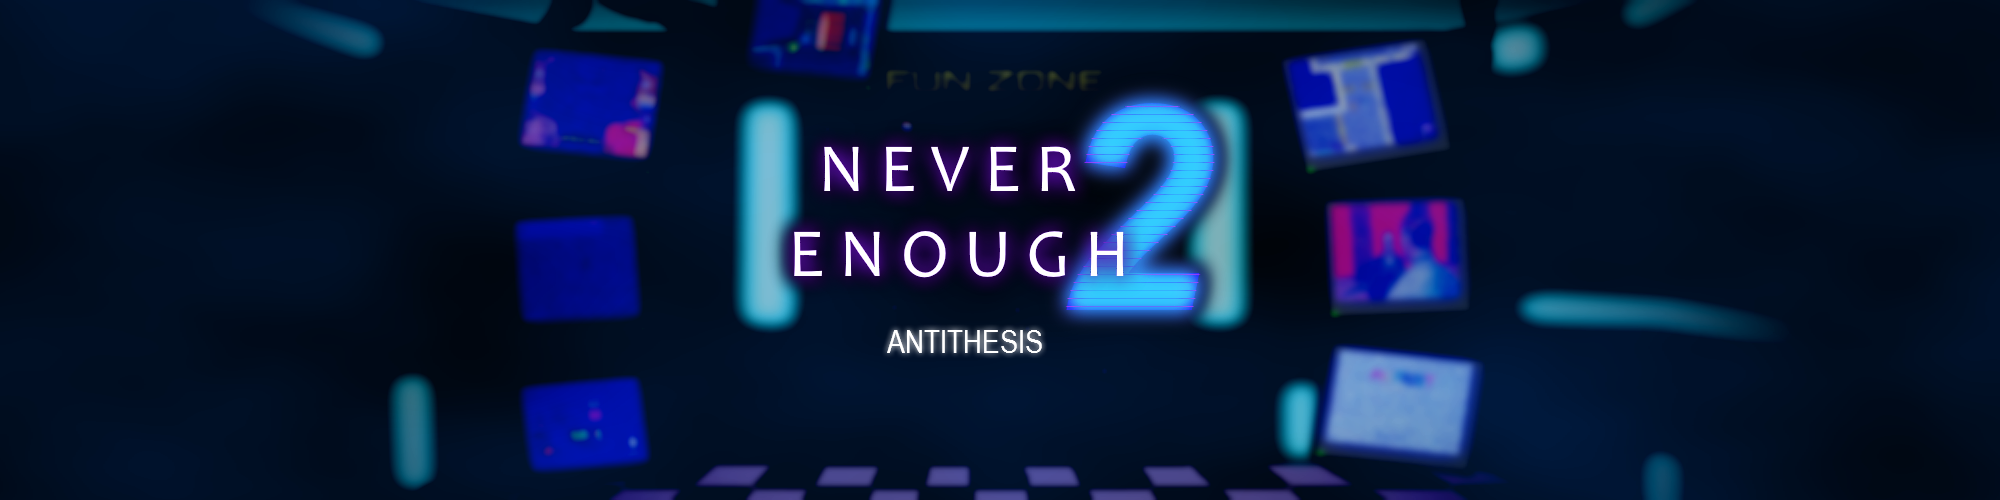 Never Enough 2: Antithesis (FNaF Fangame)